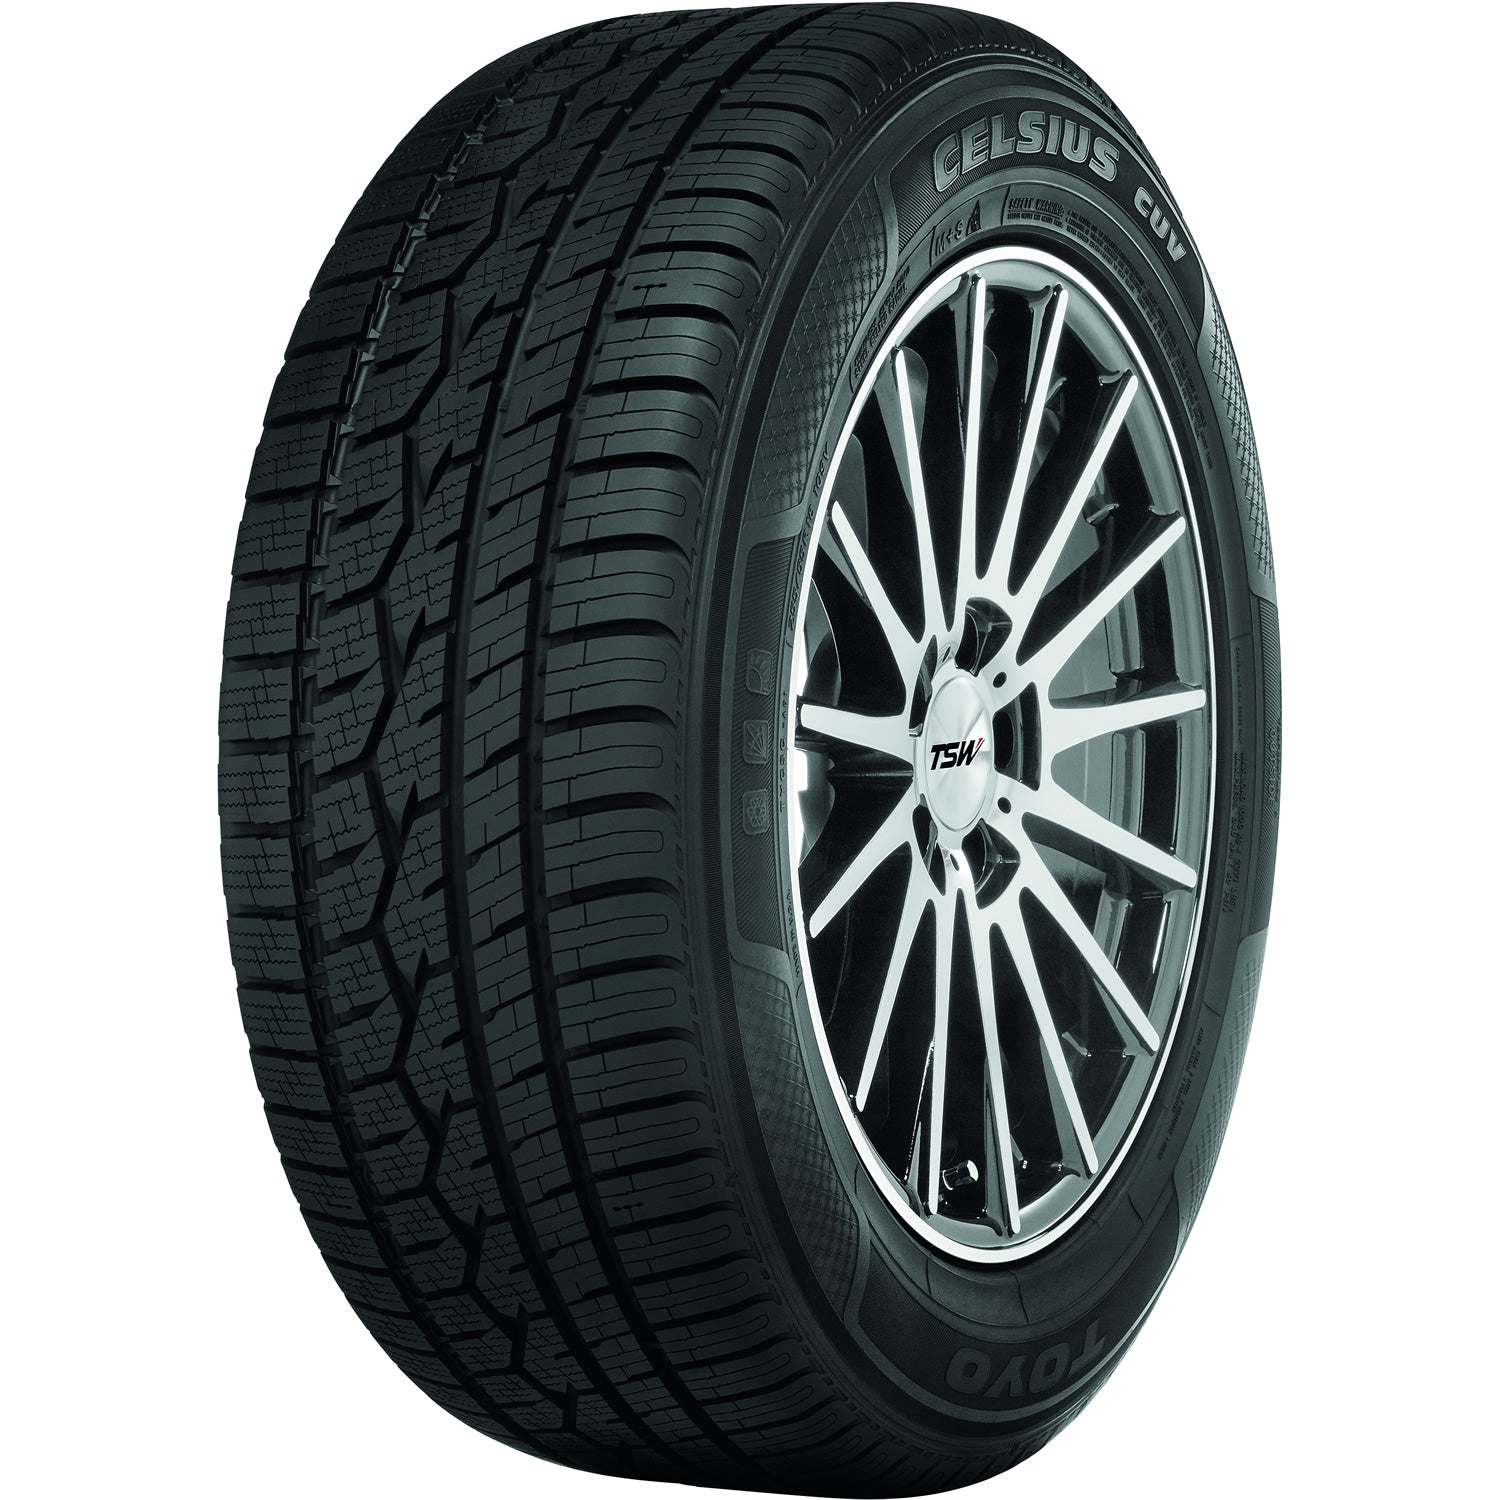 TOYO TIRES CELSIUS CUV 235/70R16 (29X9.4R 16) Tires